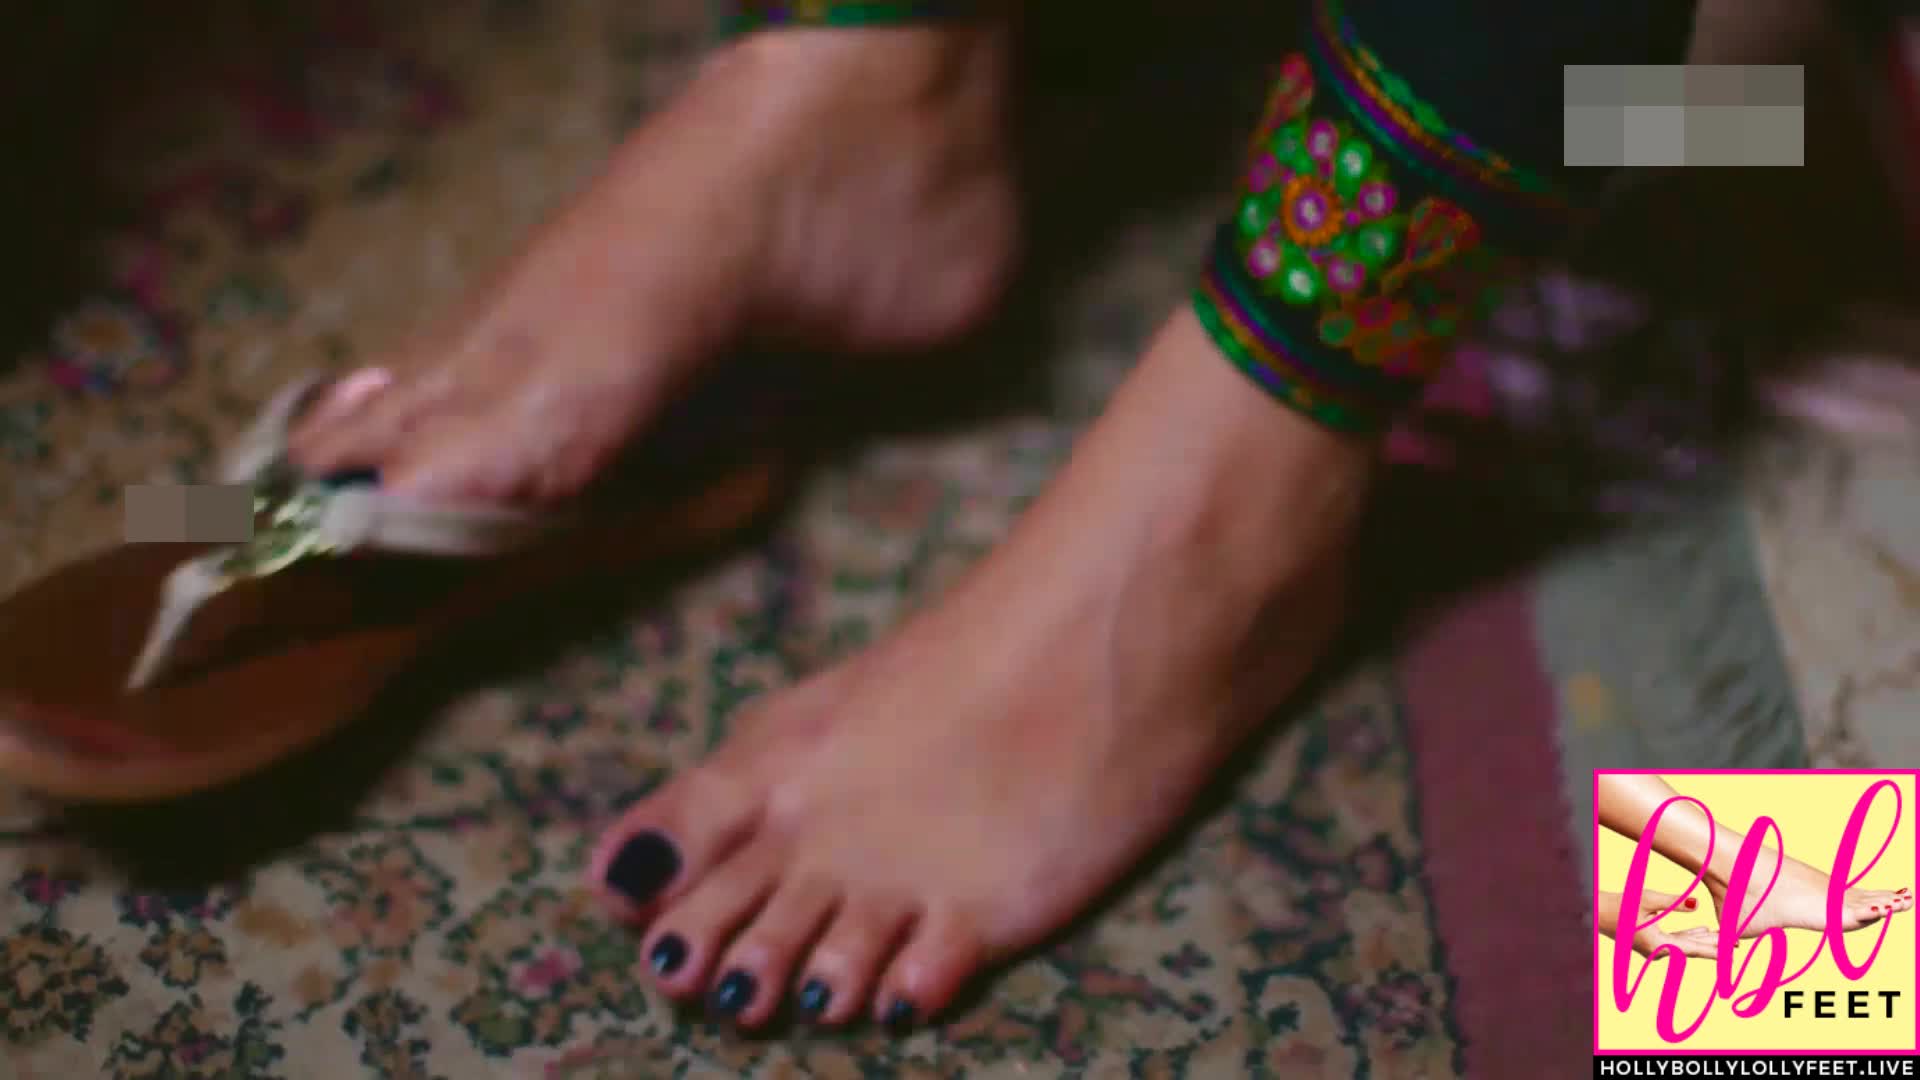 maria-wasti-feet-close-up-urdu1-dukh-sukh-ep-12-03